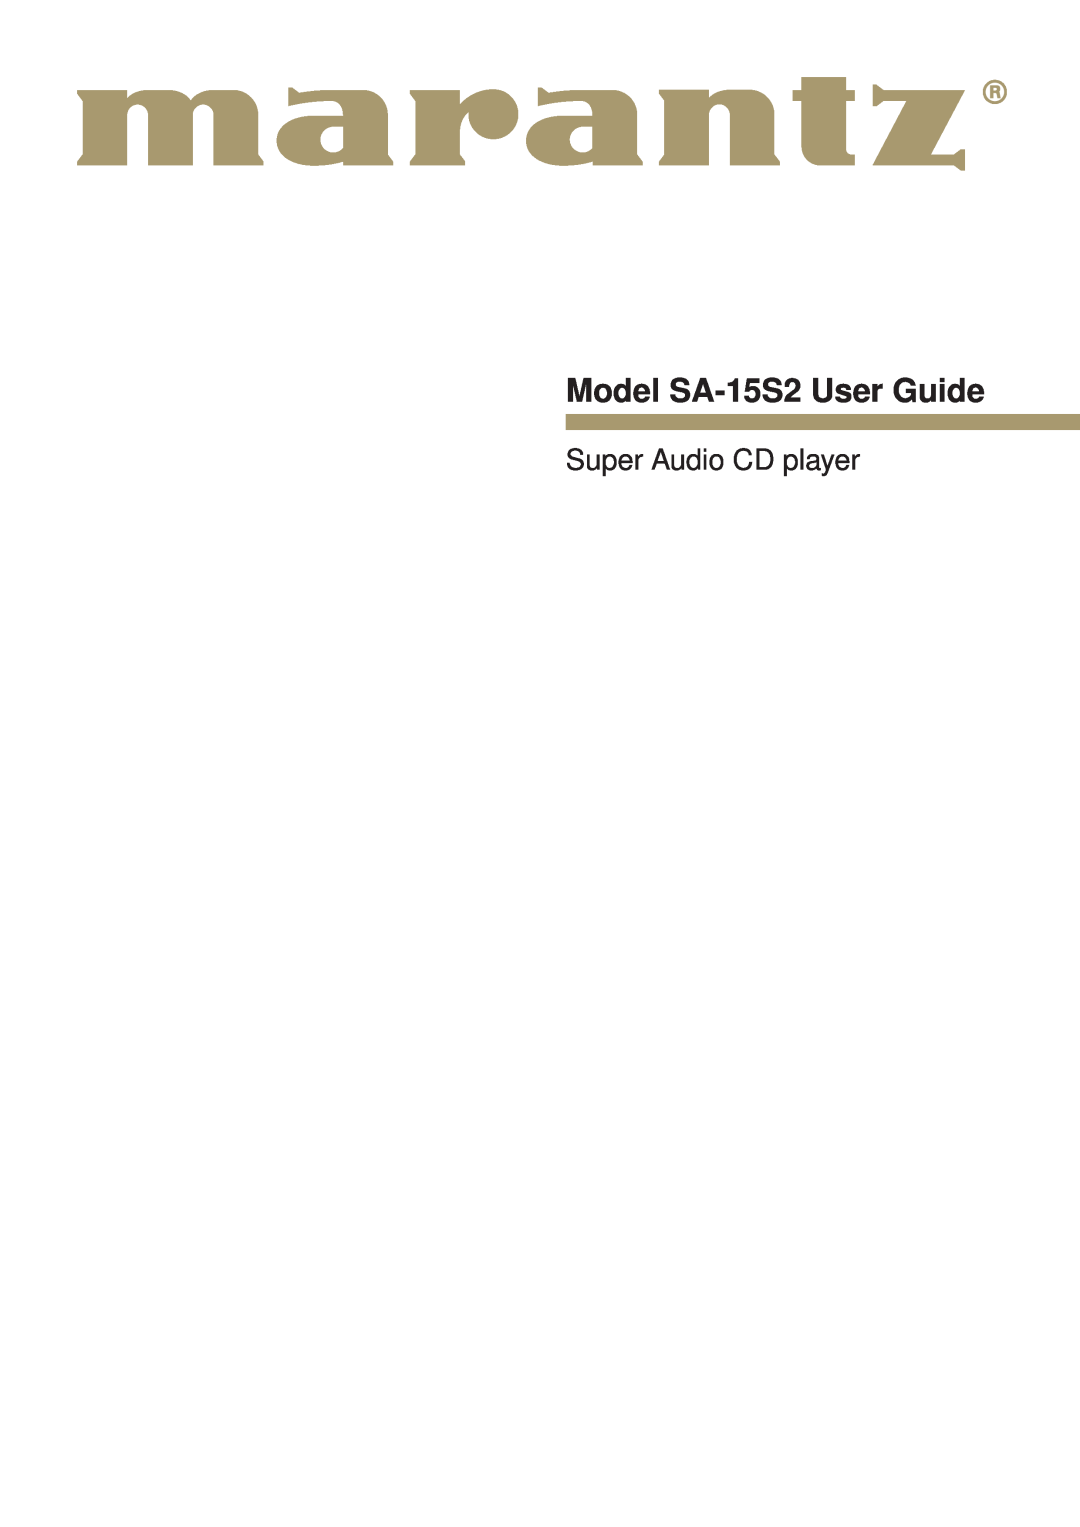 Marantz manual Model SA-15S2User Guide, Super Audio CD player 